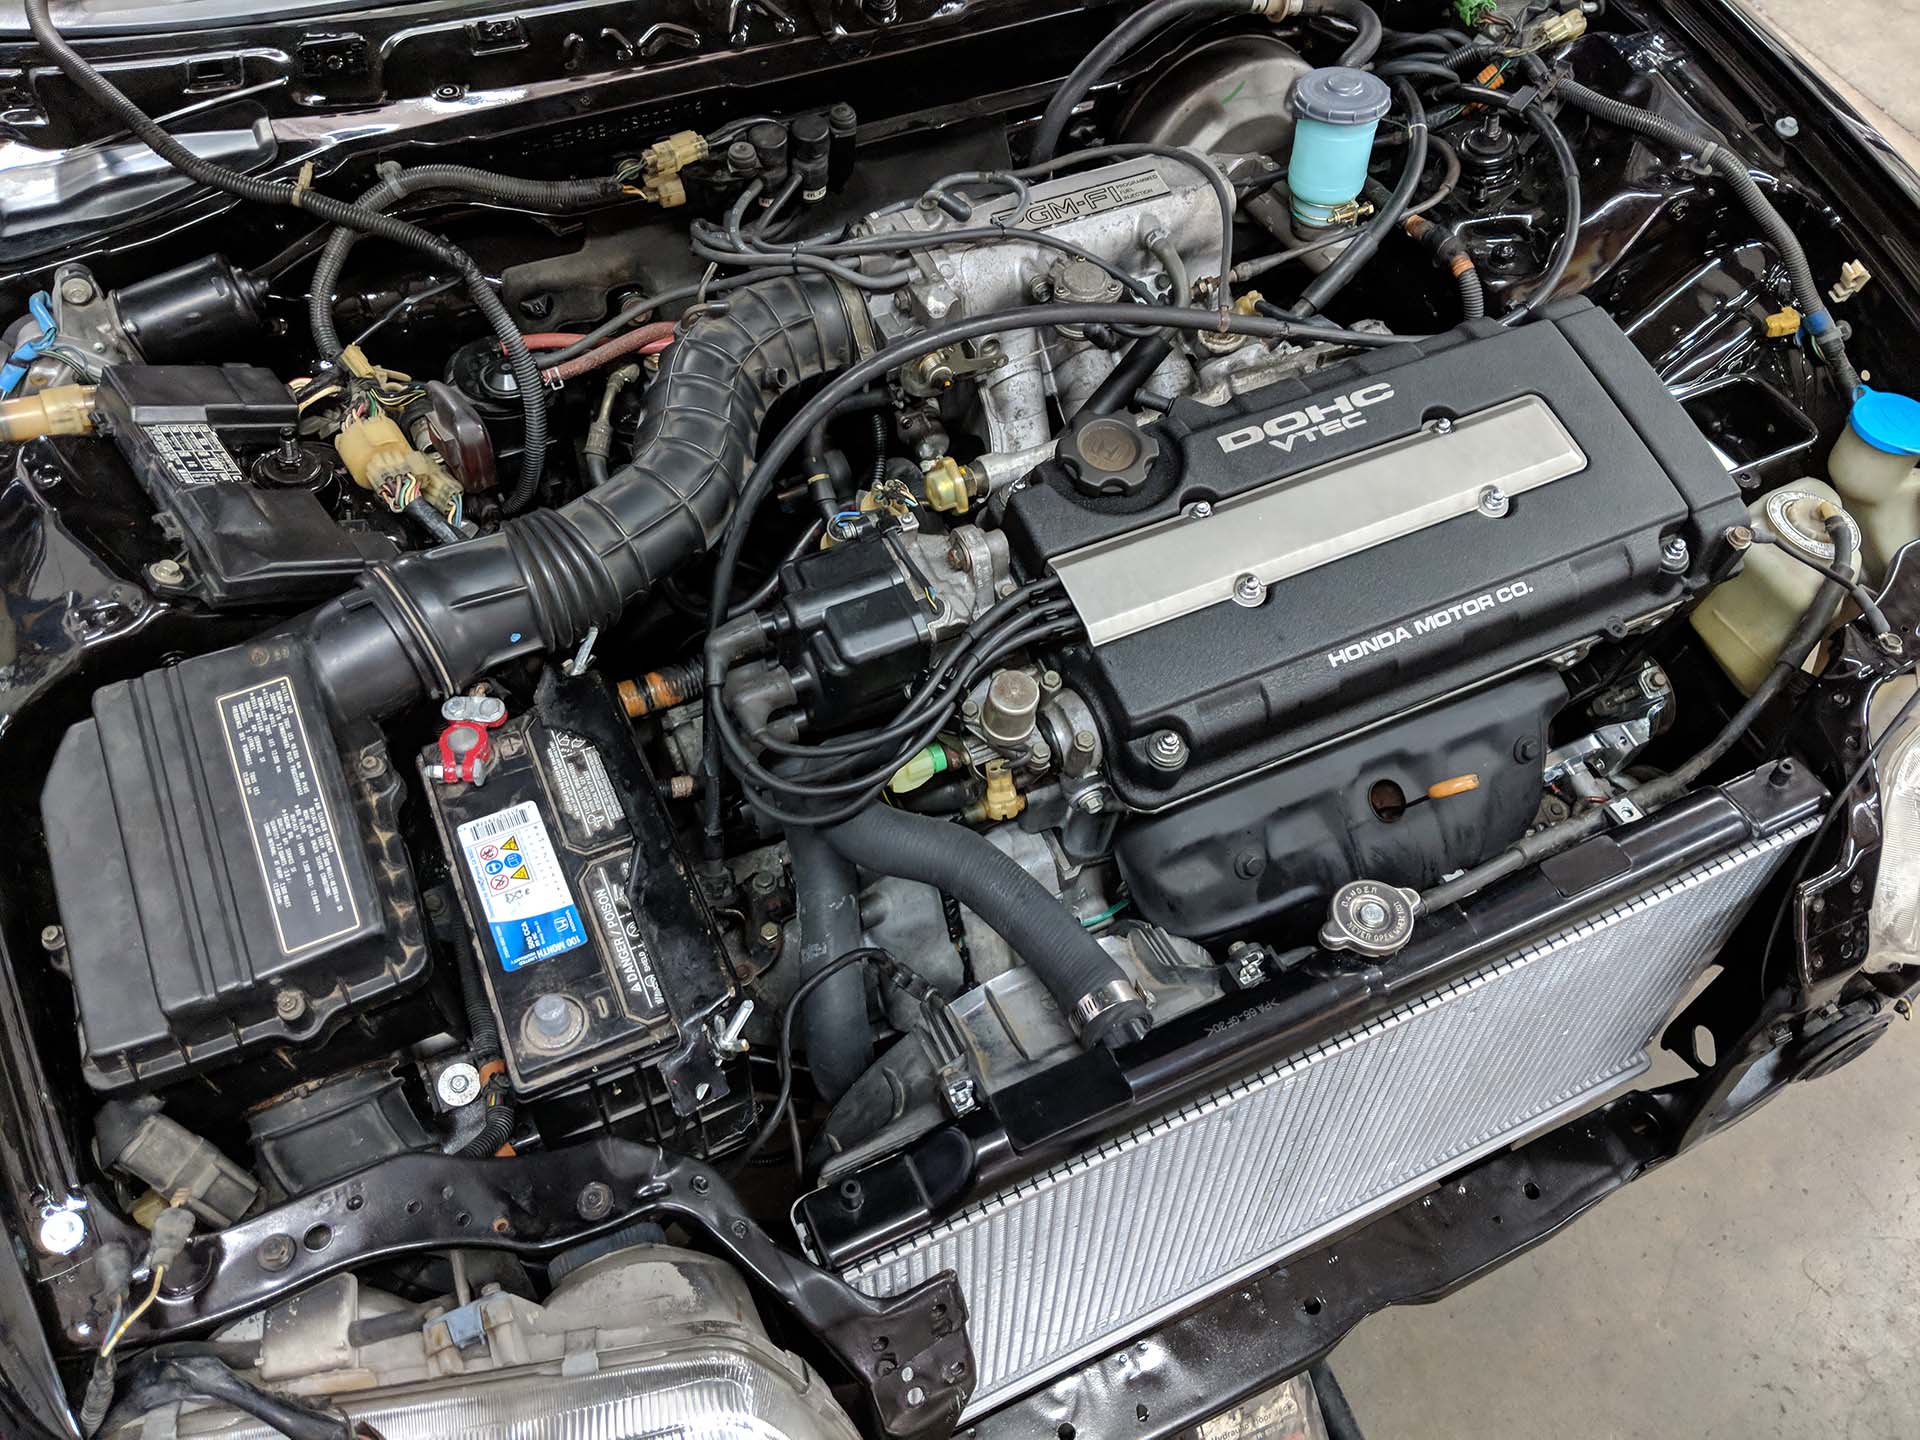 Engine and Radiator Installed